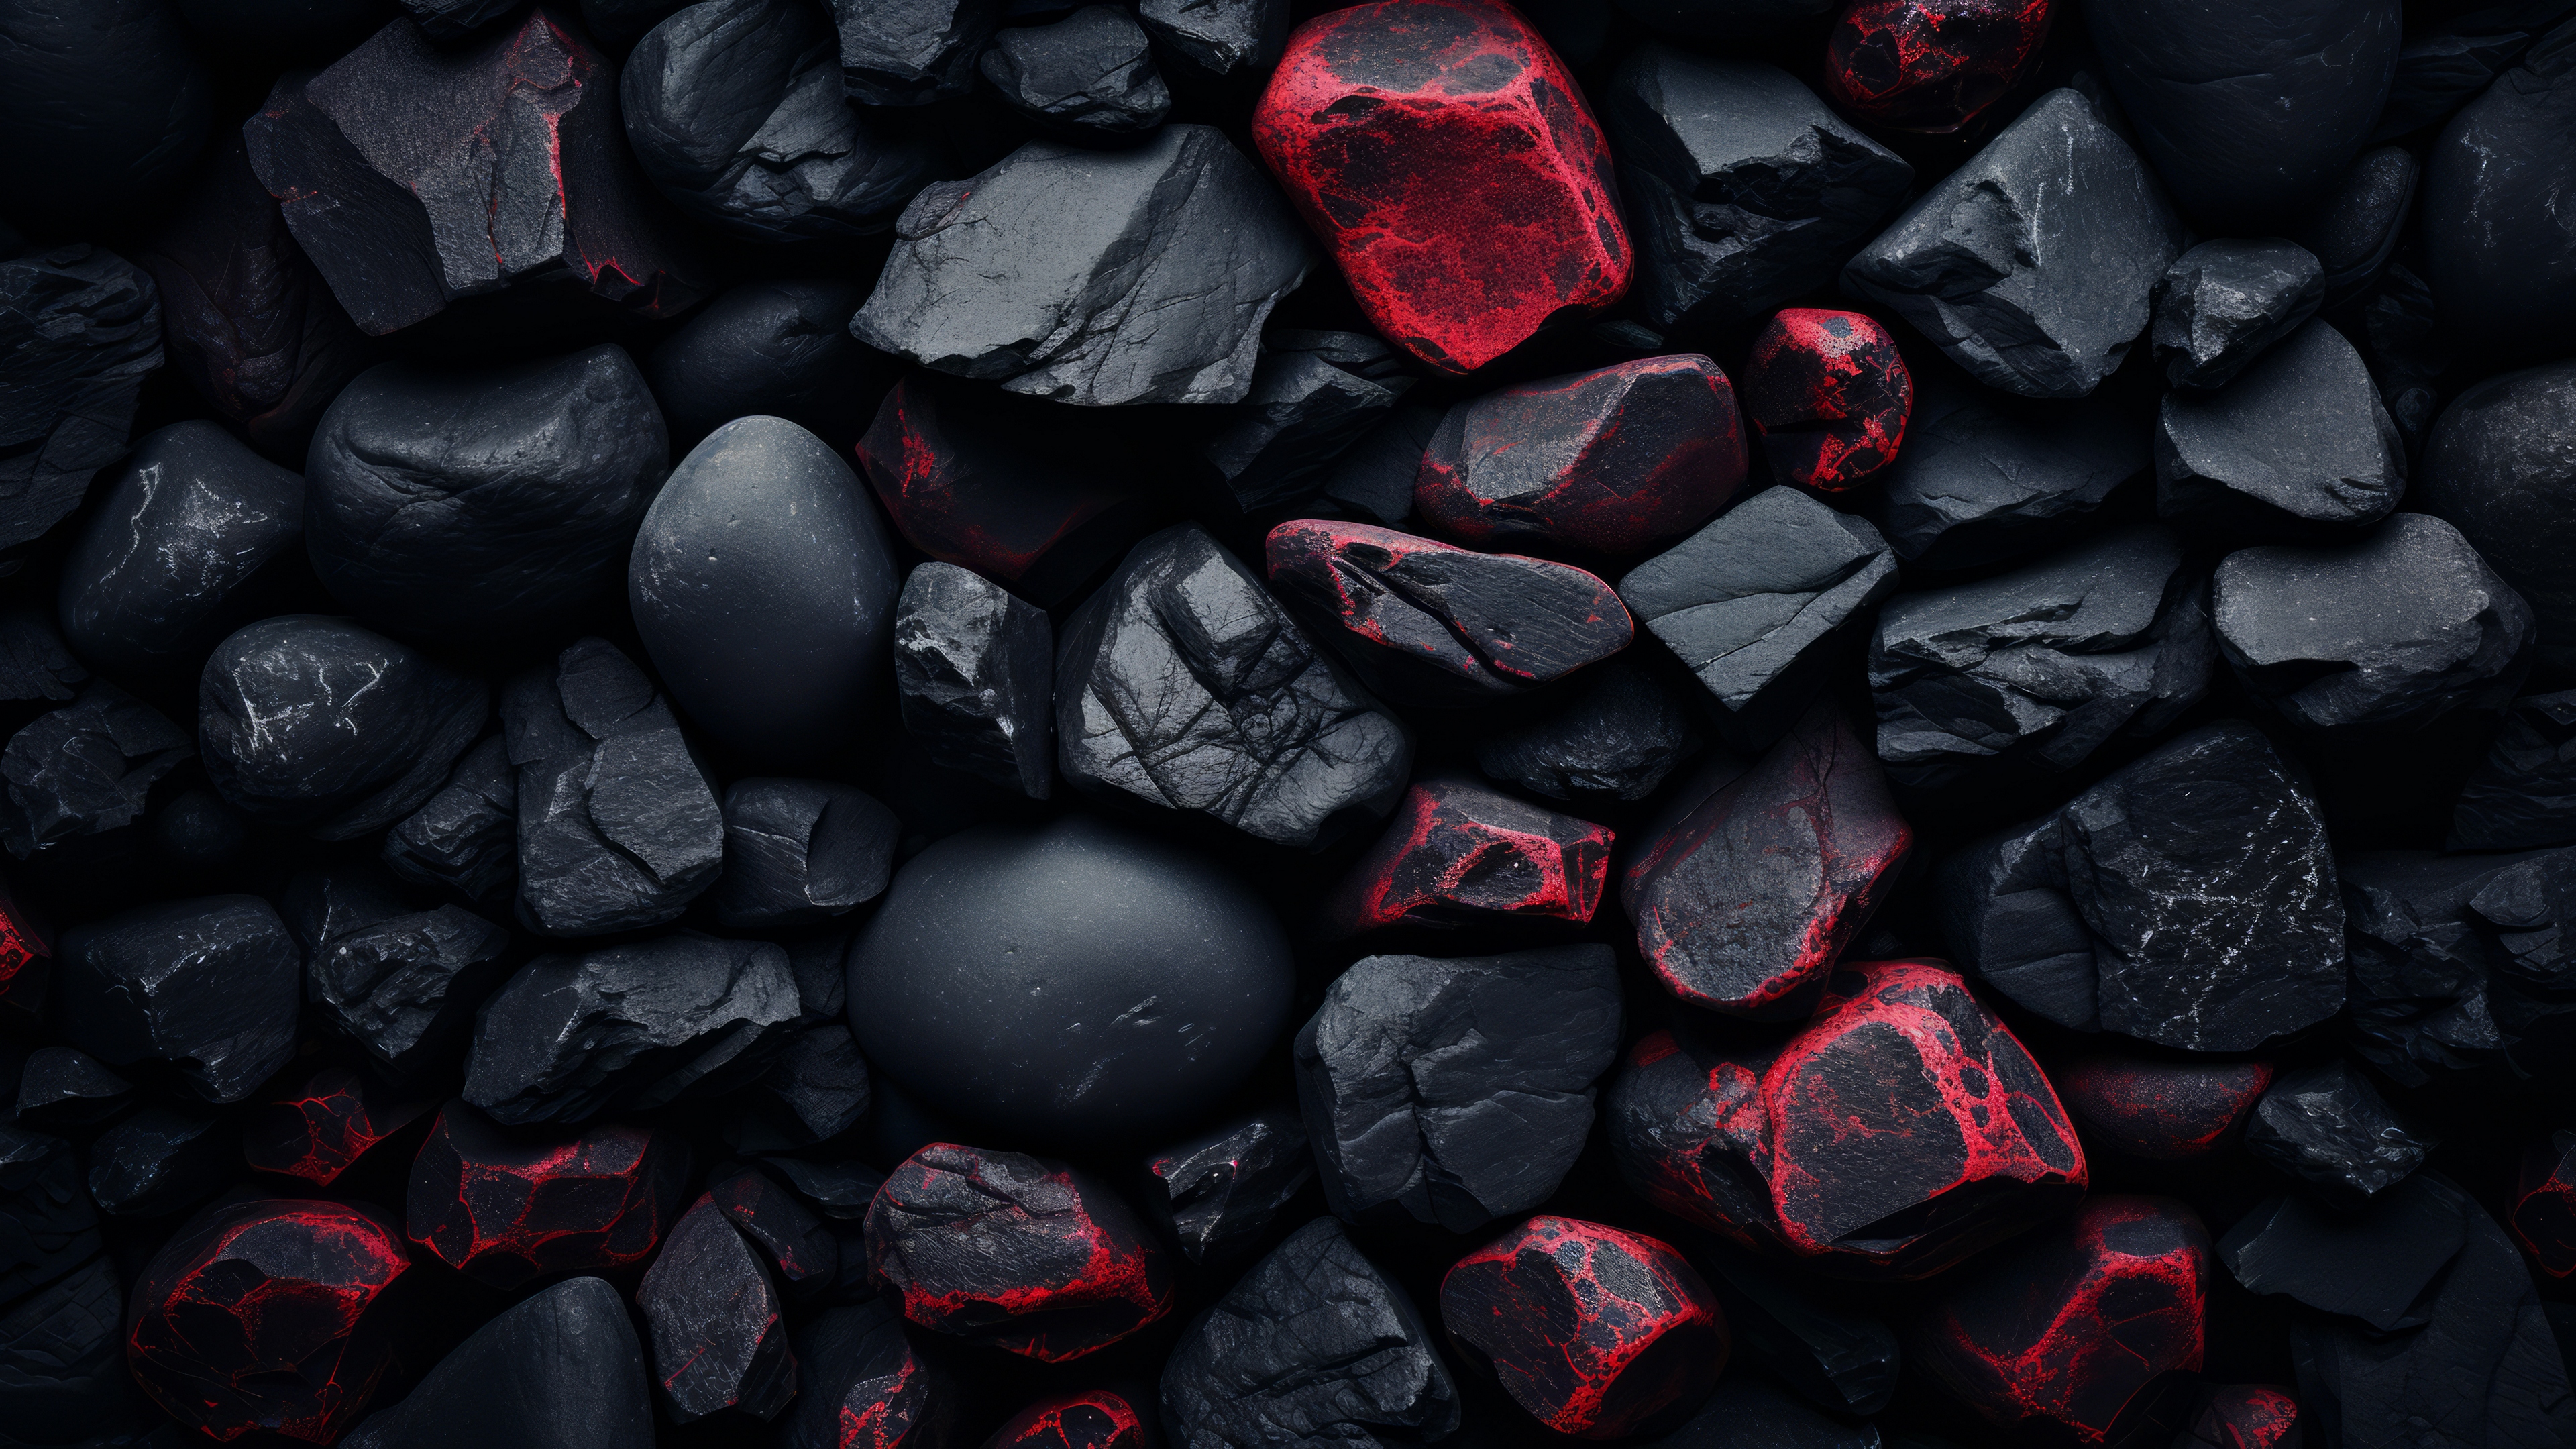 Reddish stones among the black